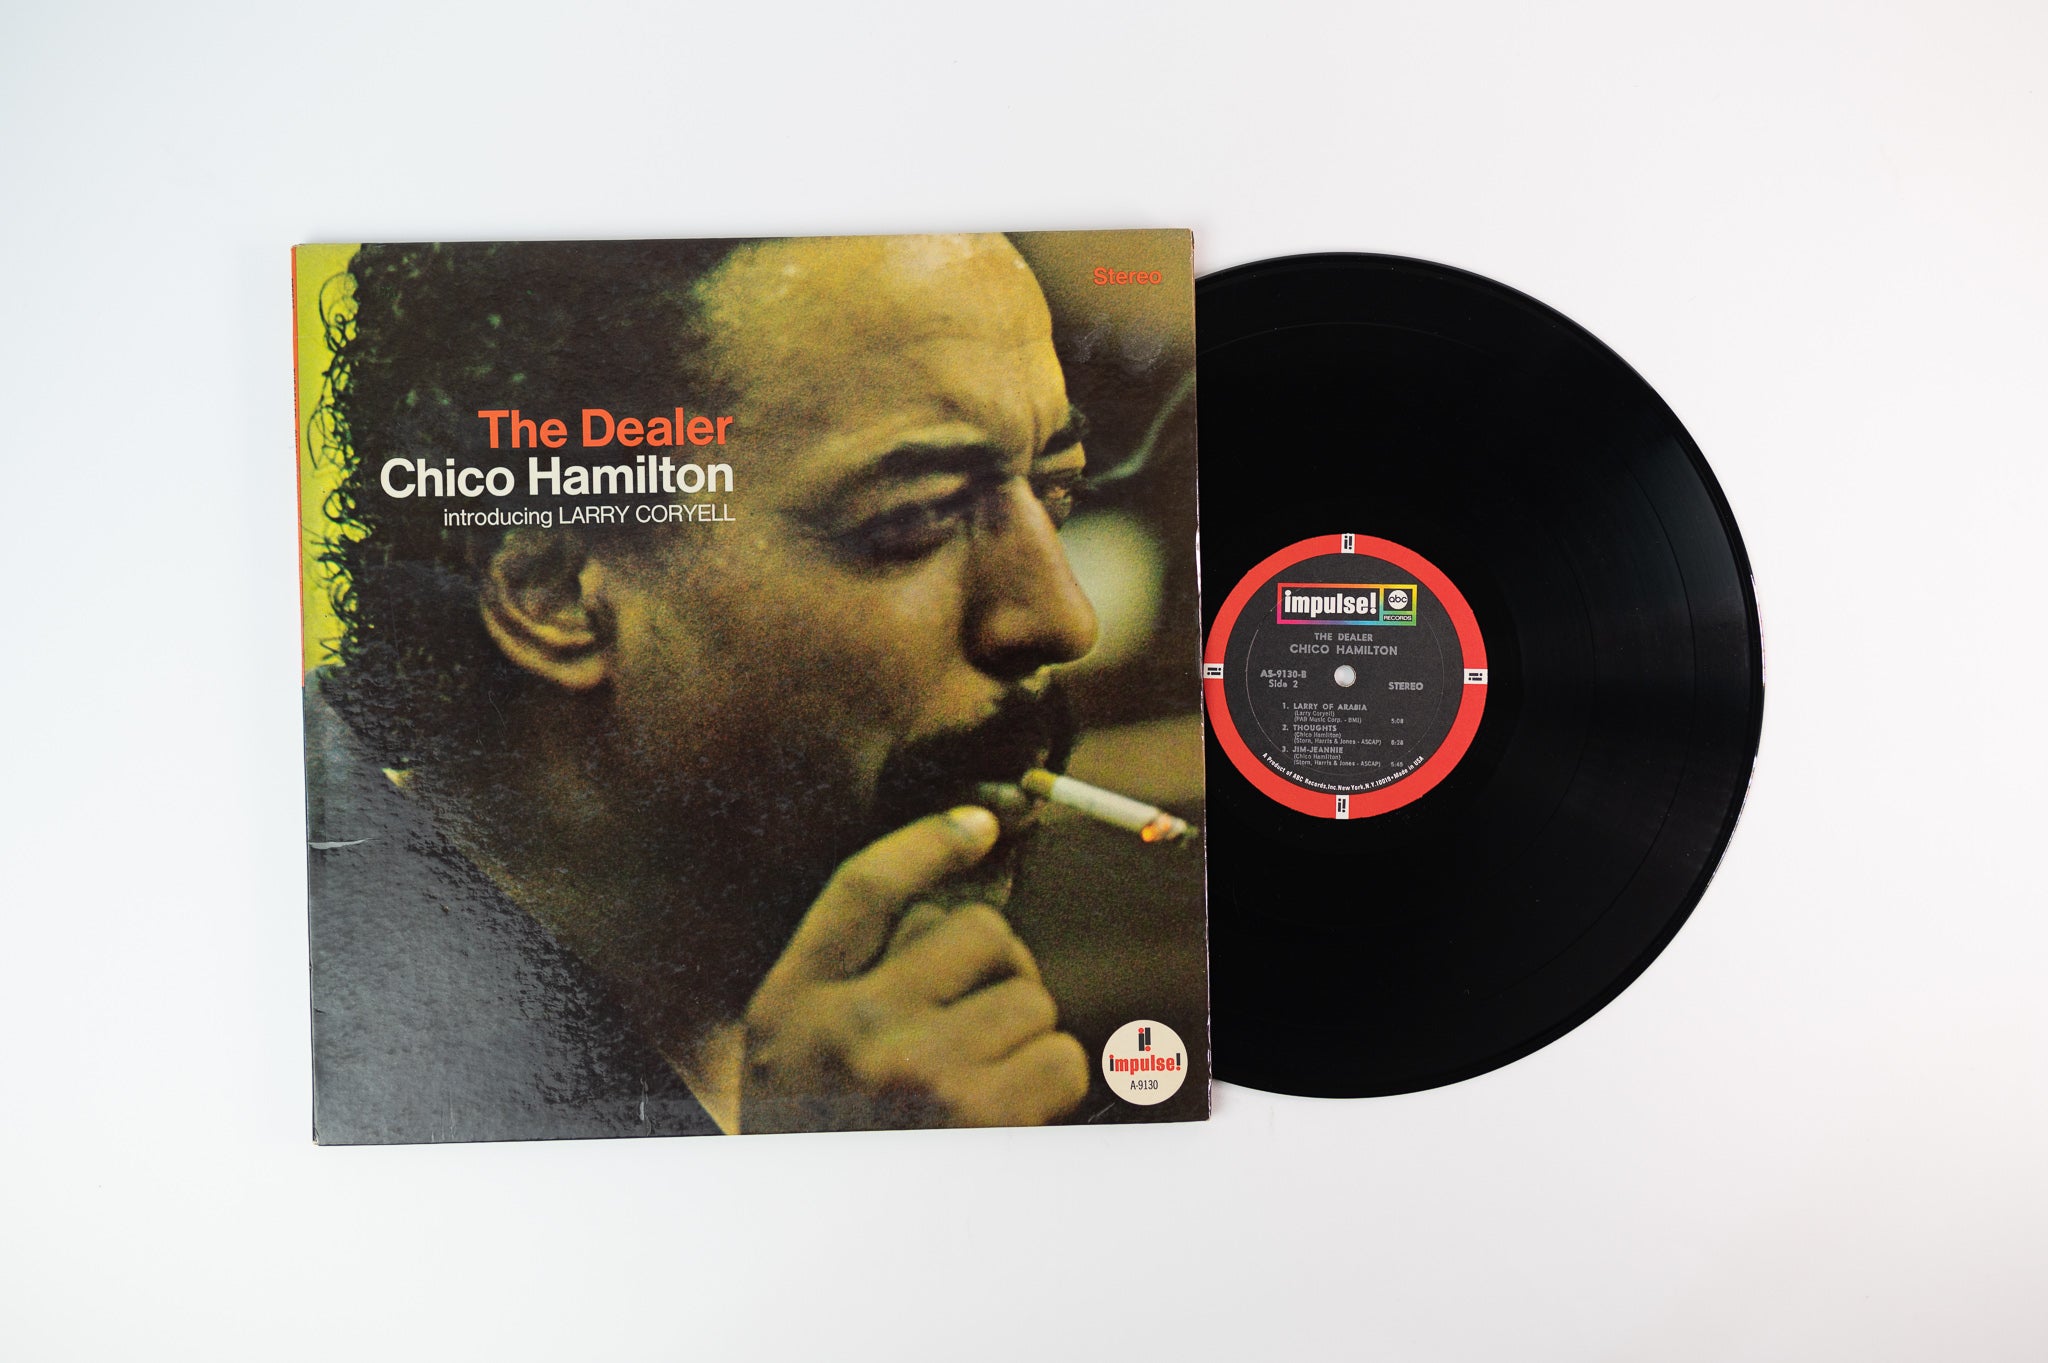 Chico Hamilton - The Dealer on ABC Impulse Stereo Reissue